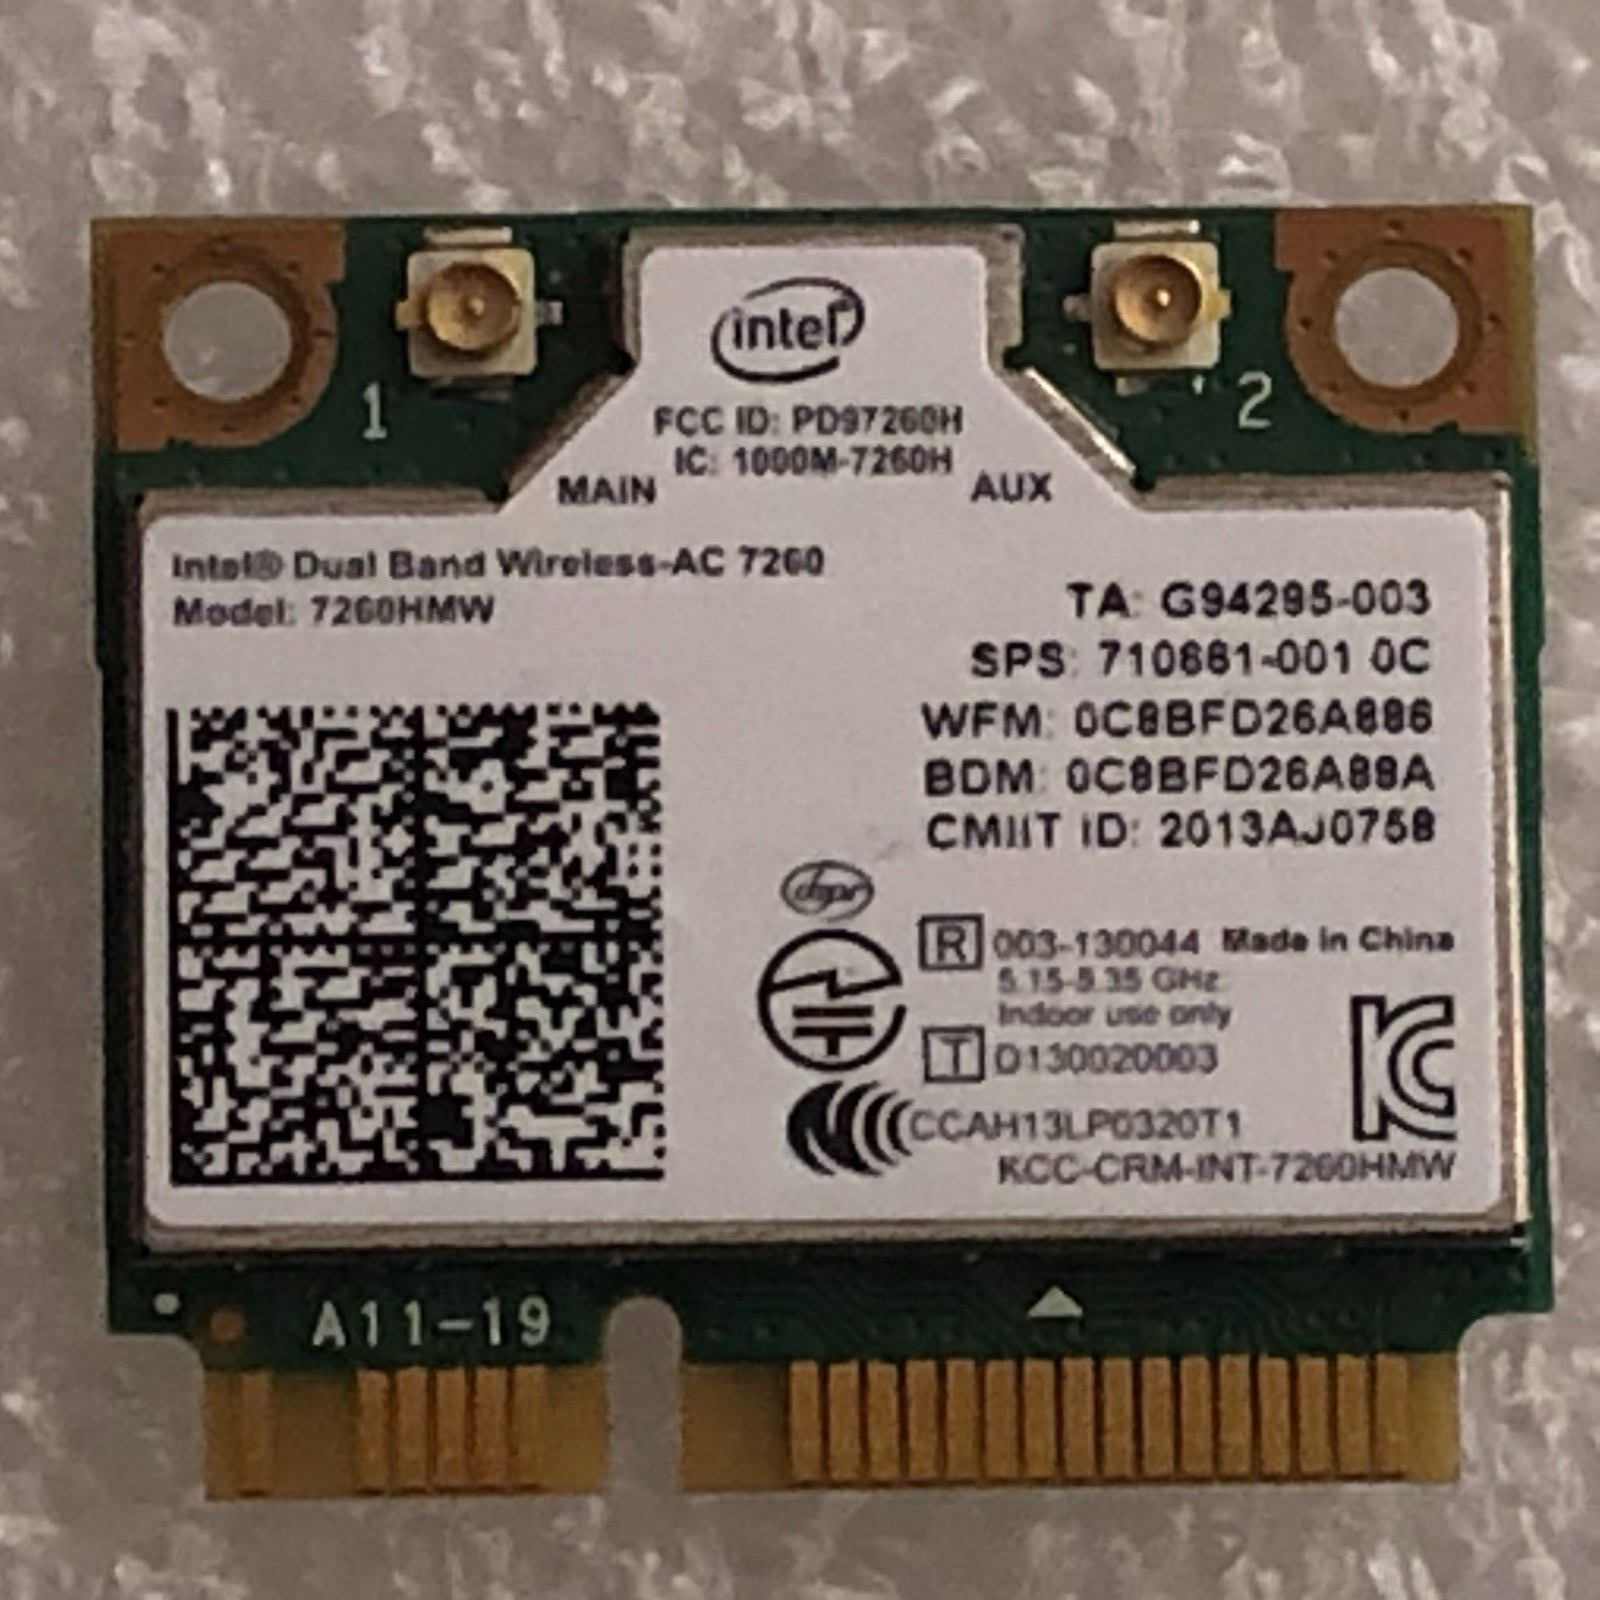 Intel 7260HMW wireless-AC 7260 PCI-E Card Dual band